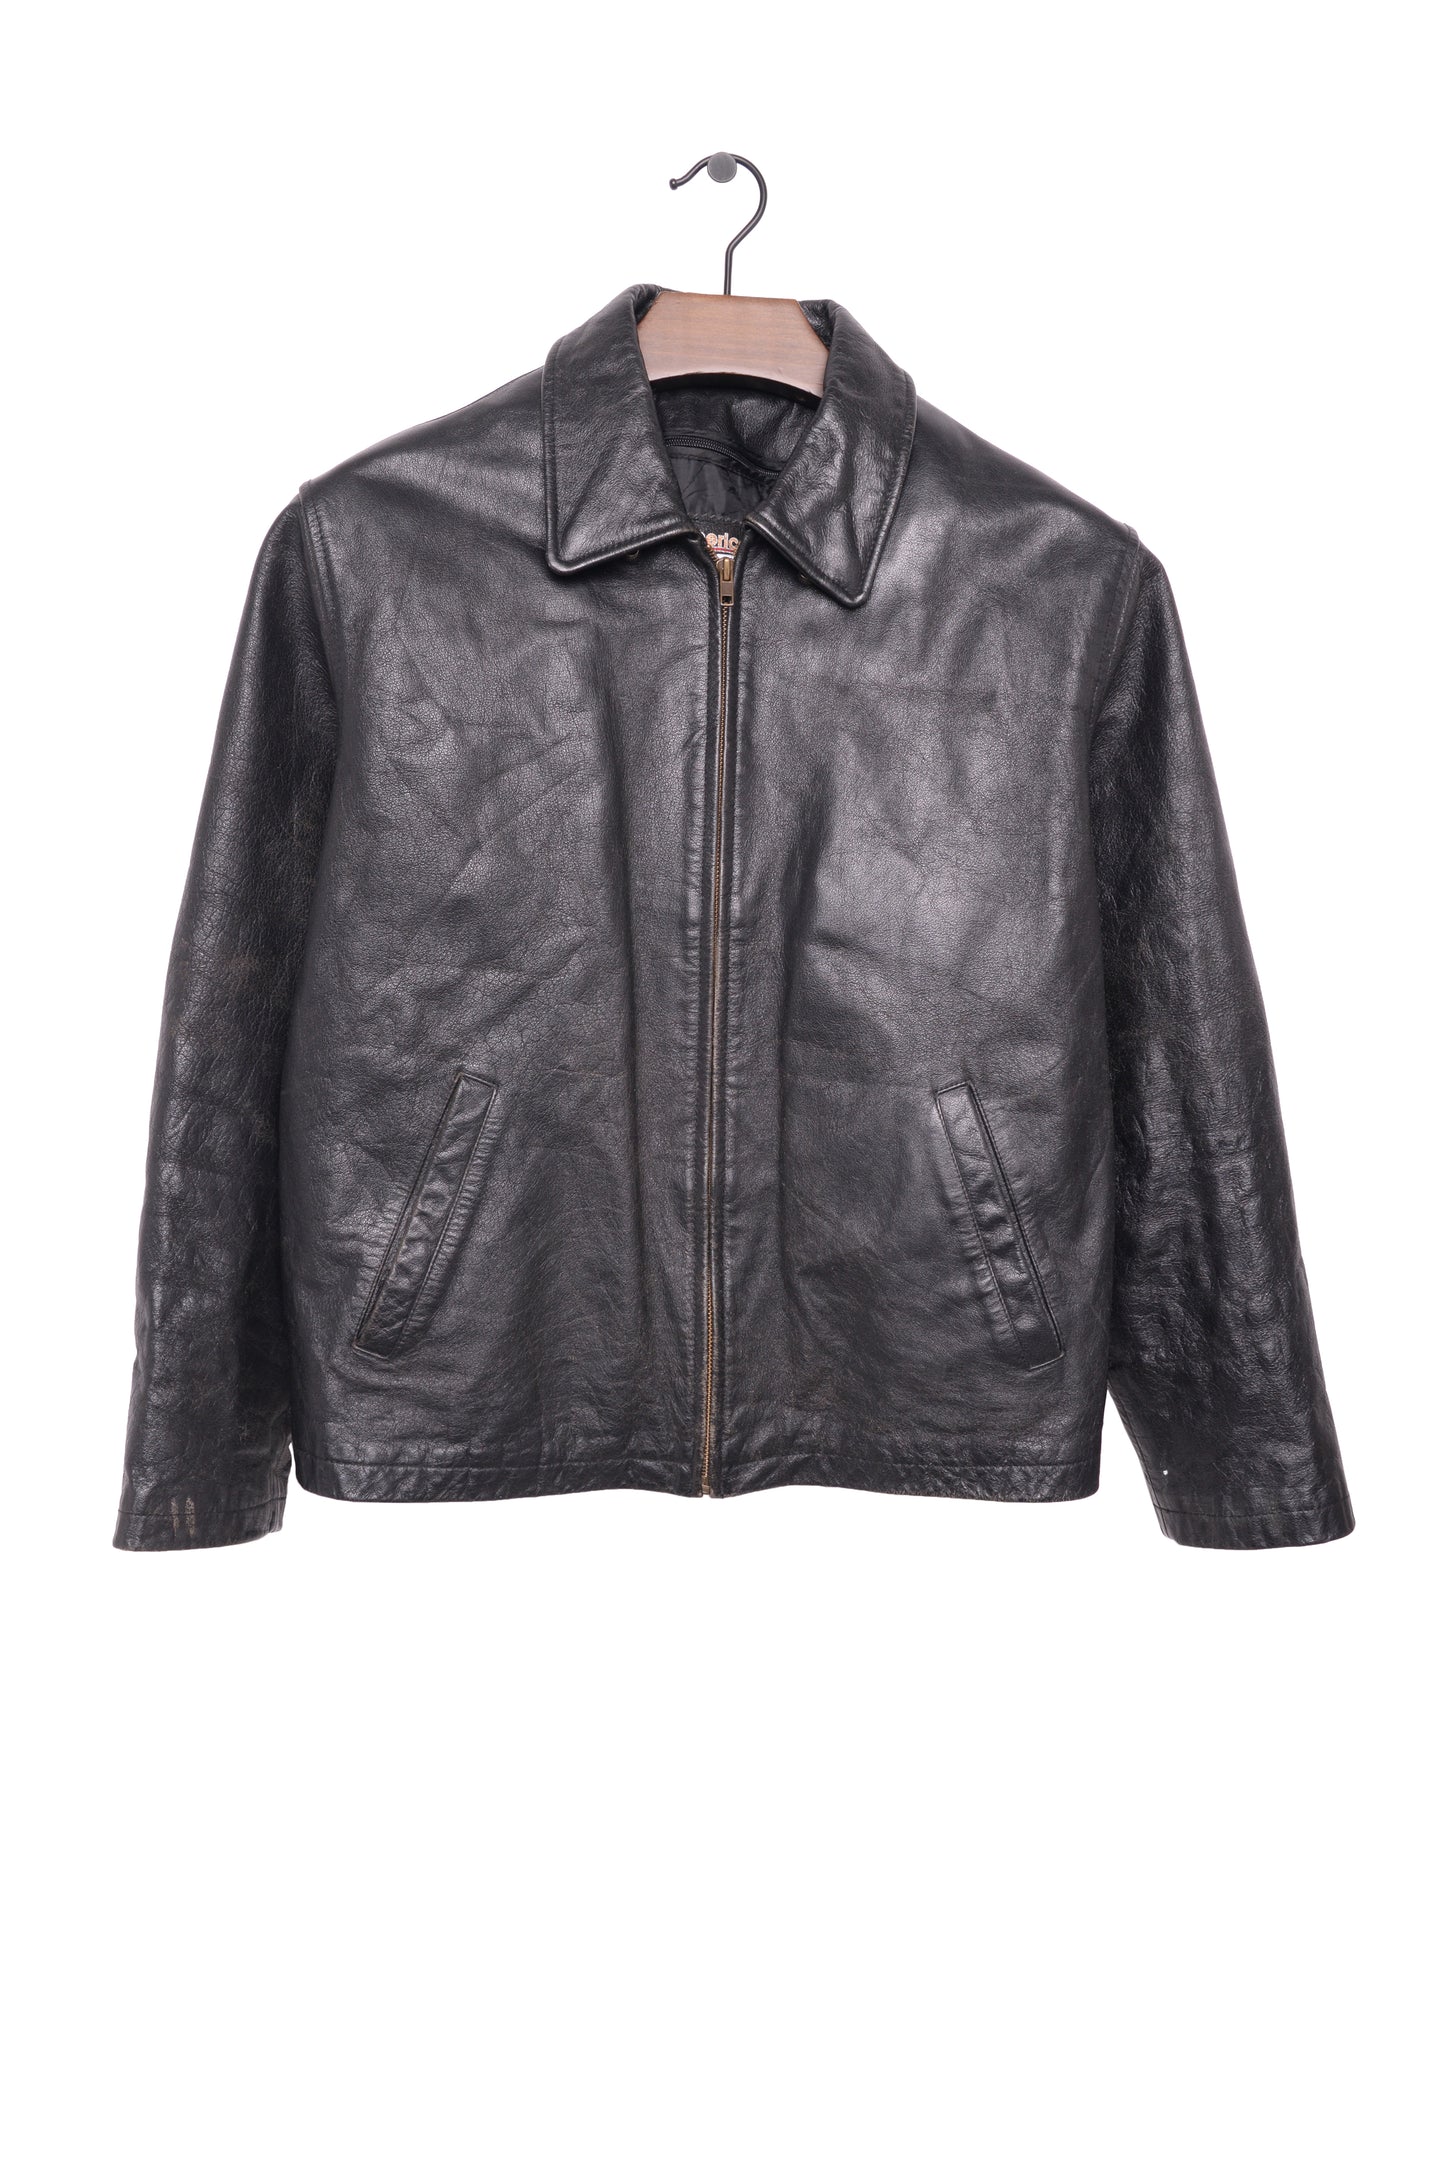 1990s Zip-Up Leather Jacket